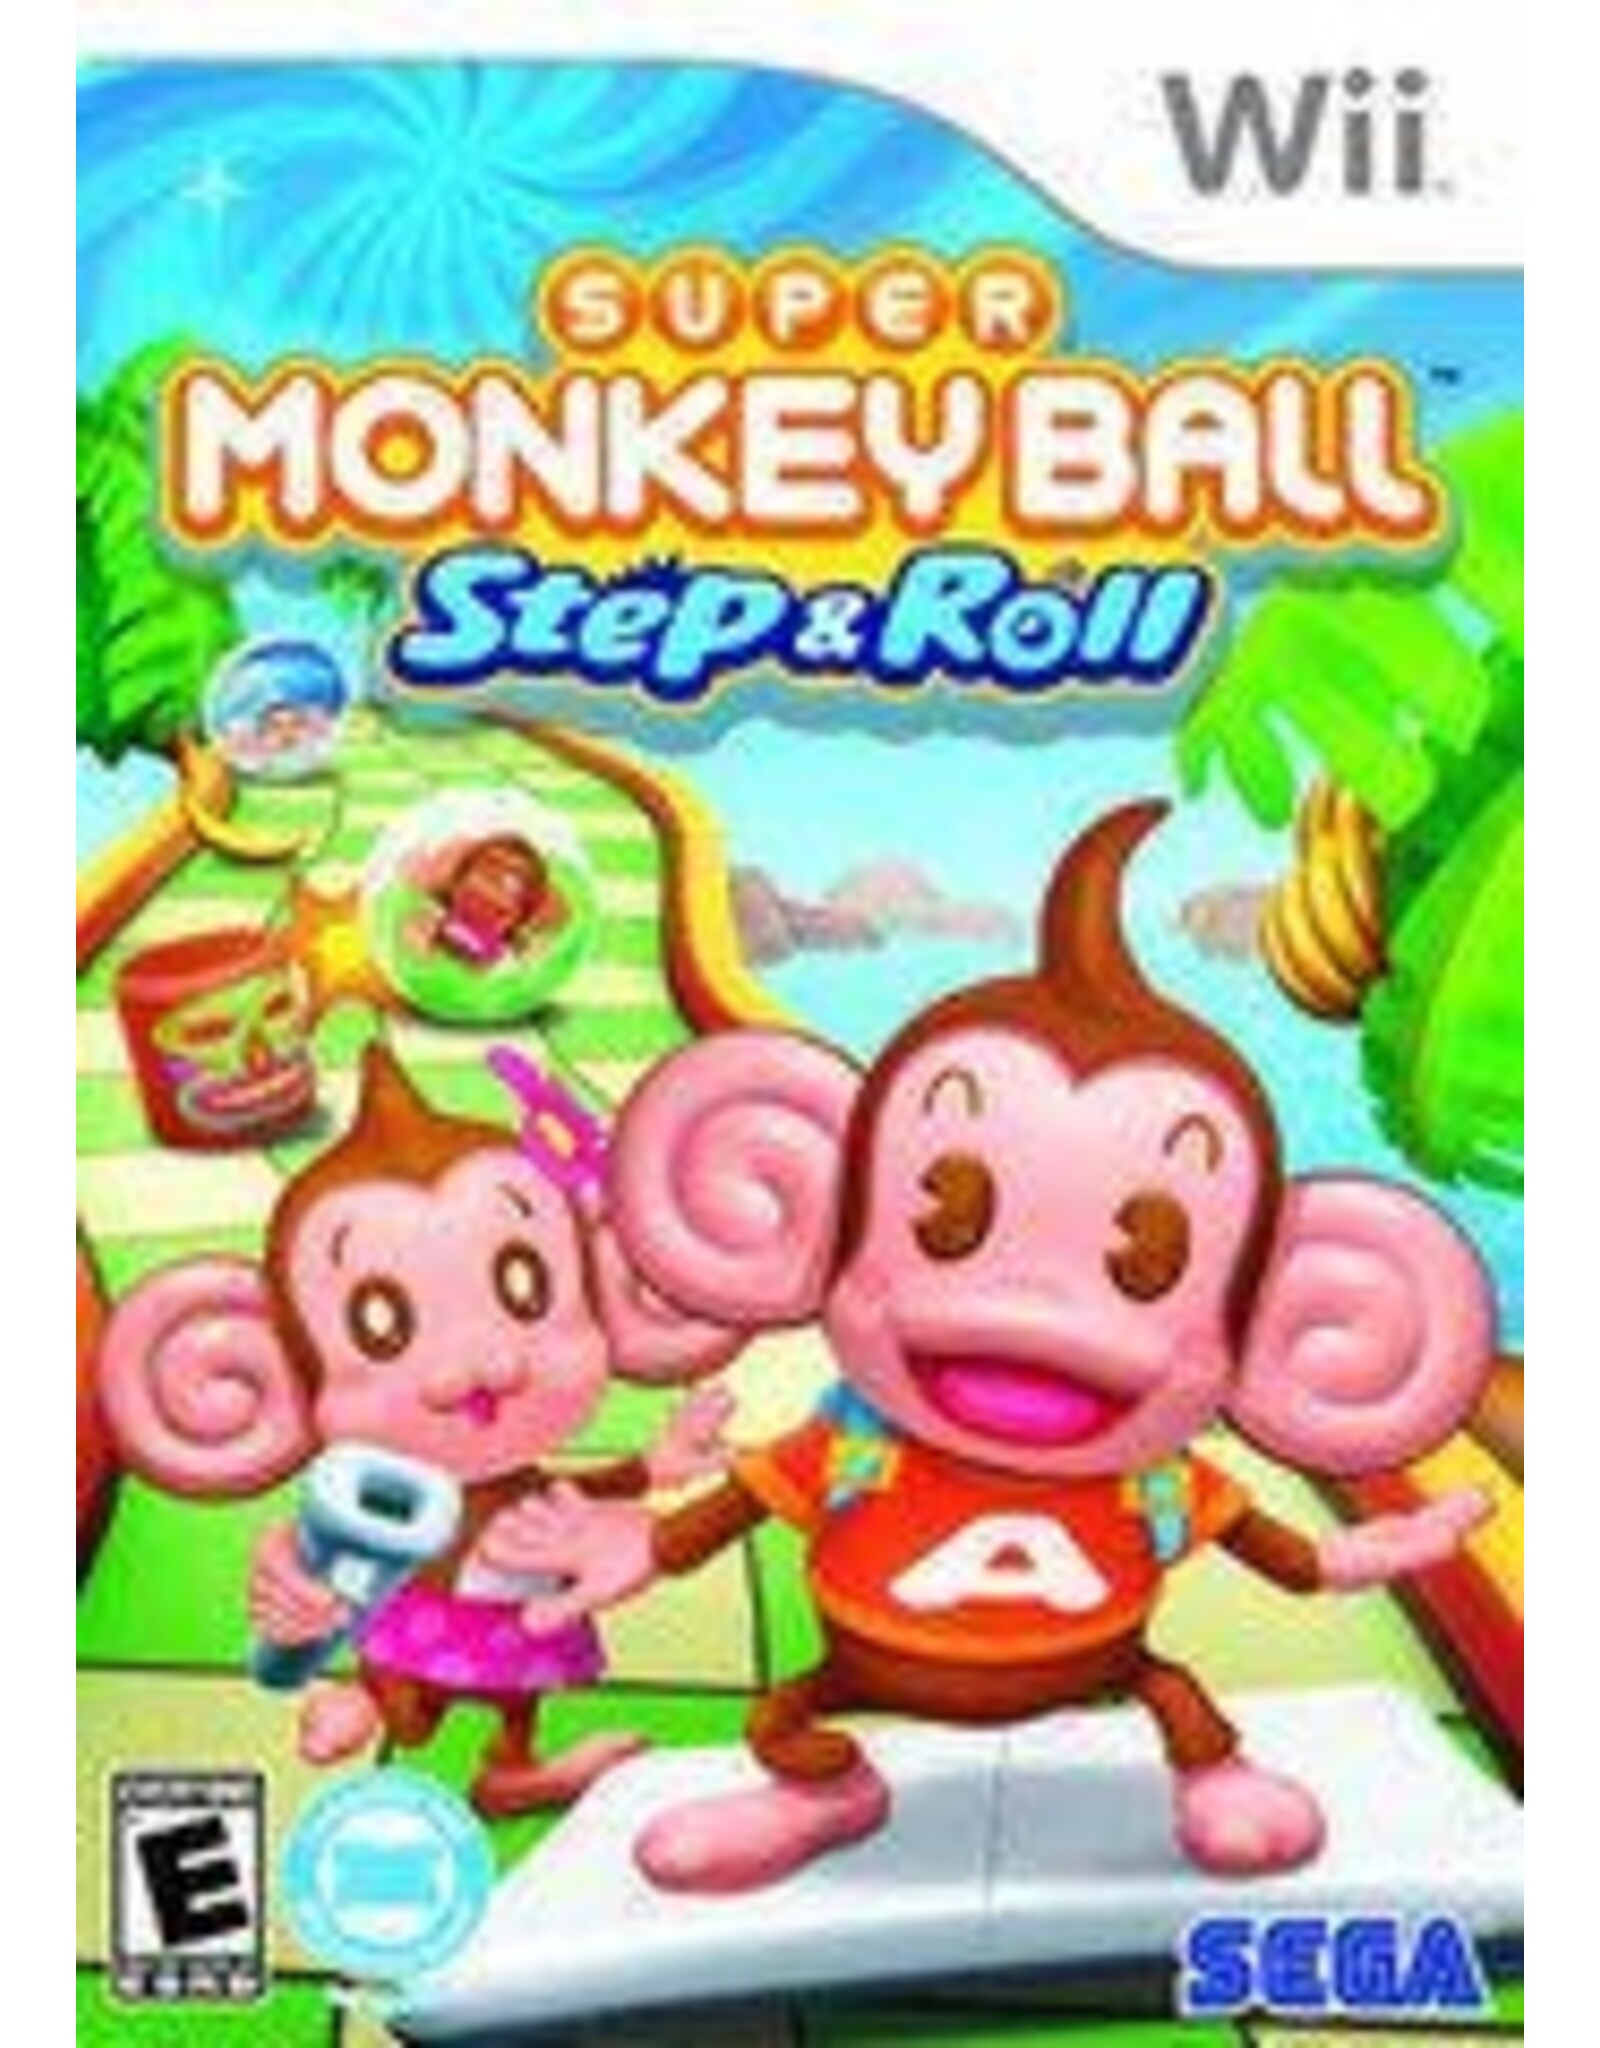 Wii Super Monkey Ball: Step & Roll (Used)